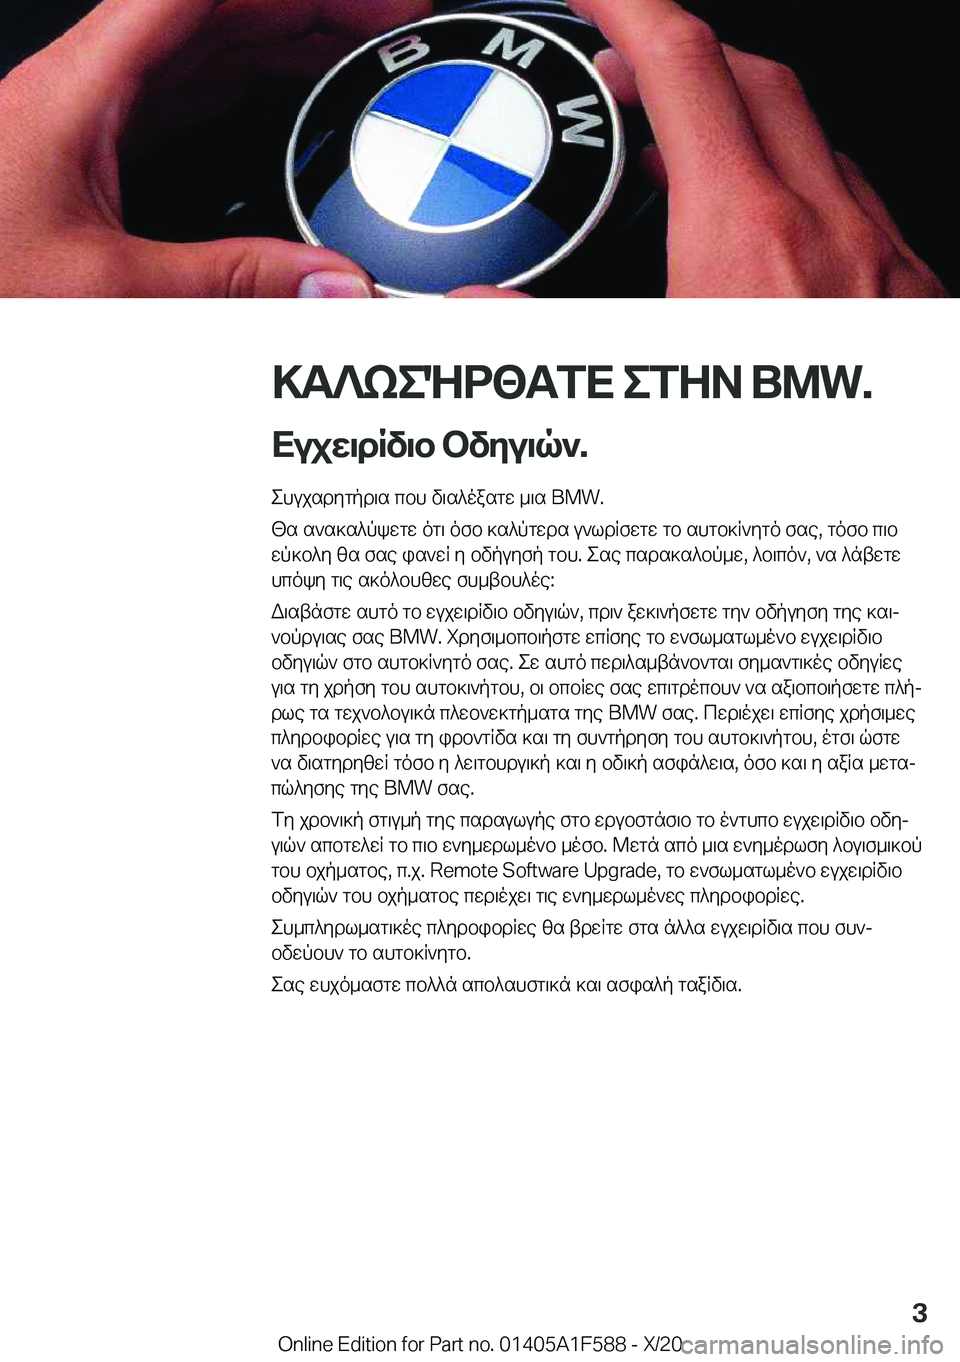 BMW X3 M 2021  ΟΔΗΓΌΣ ΧΡΉΣΗΣ (in Greek) >T?keNd<TfX�efZA��B�M�W�.
Xujw\dRv\b�bvyu\q`�. ehujsdygpd\s�cbh�v\s^oasgw�_\s��B�M�W�.
[s�s`s]s^pkwgw�og\�ofb�